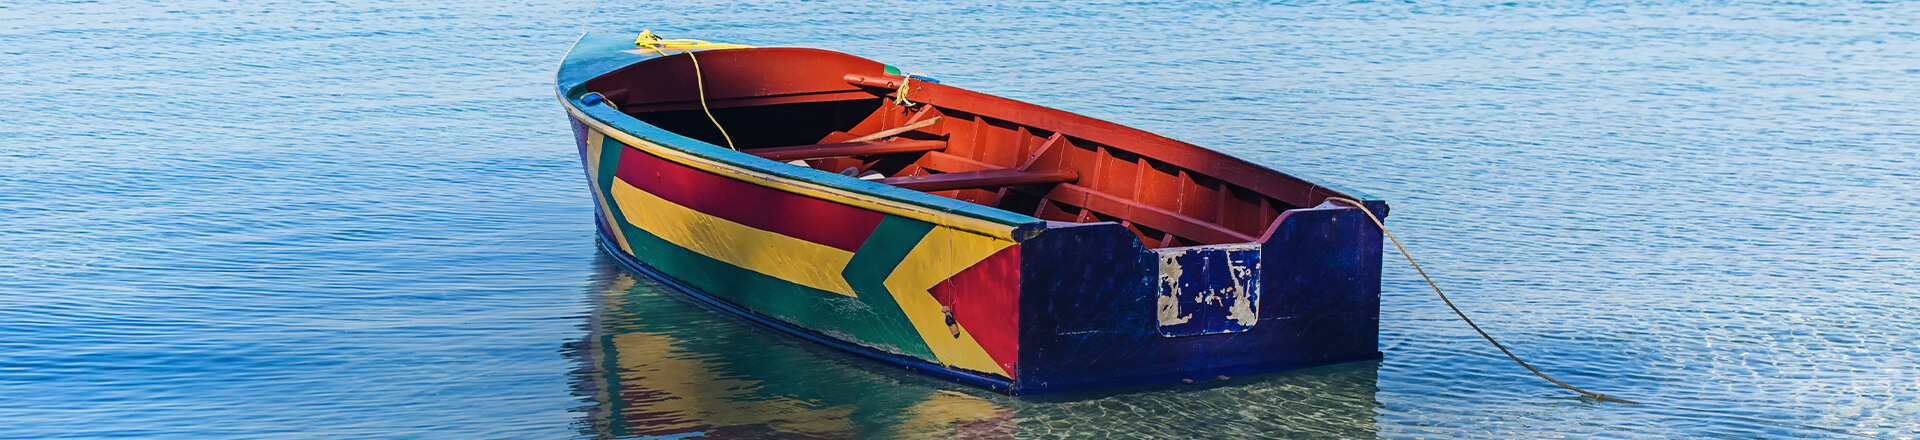 colorful rowboat floating anchored near shore